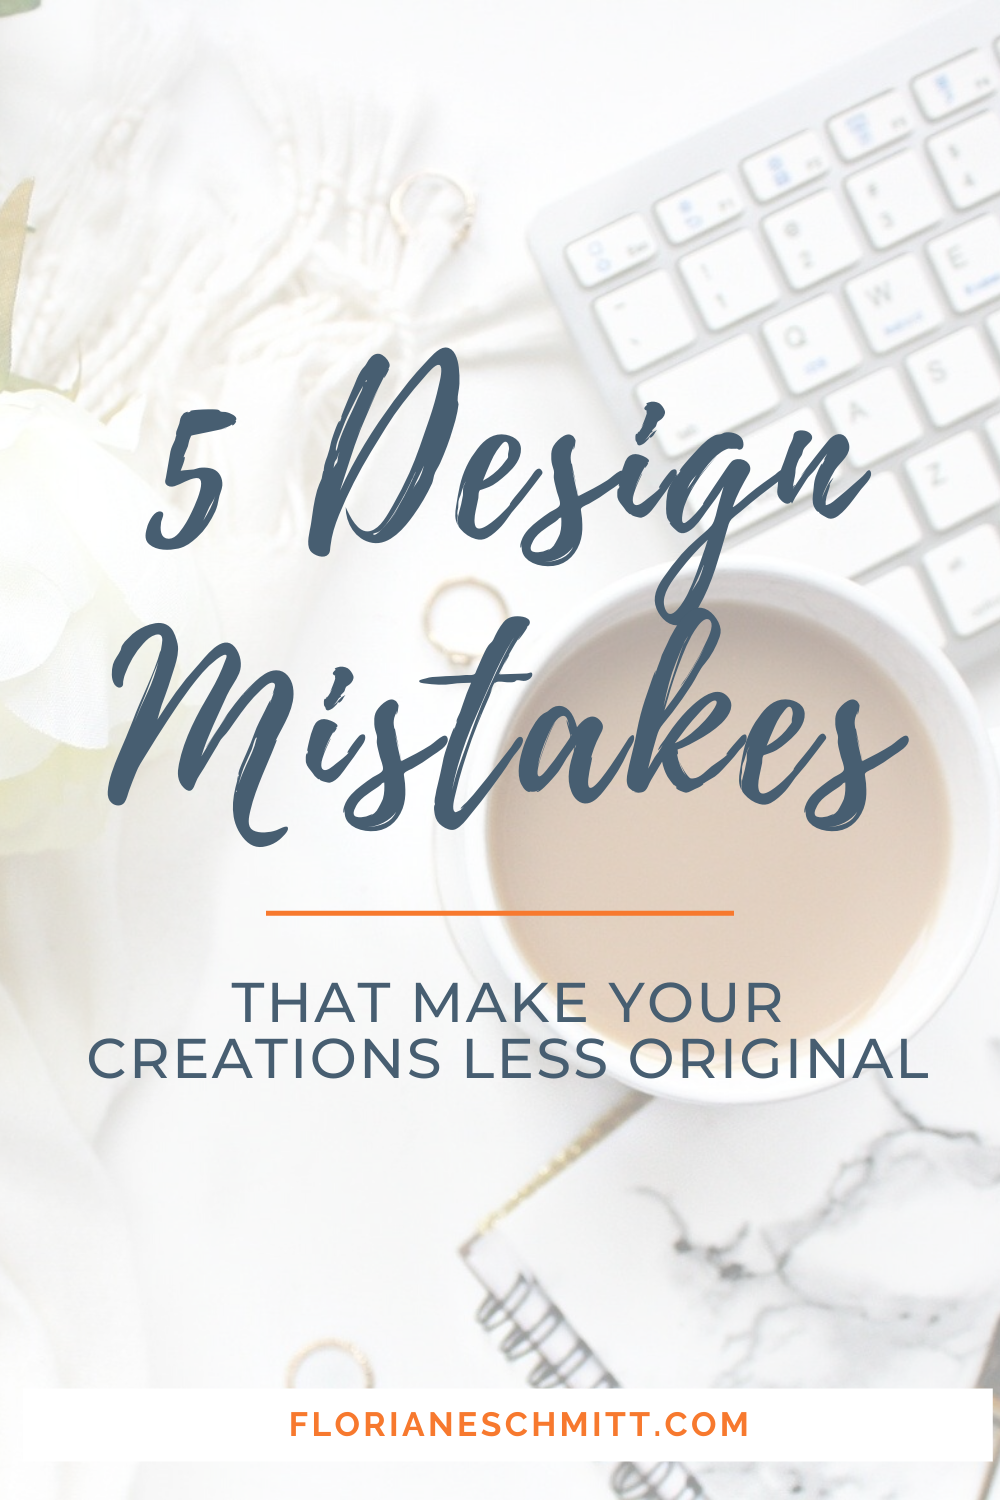 5 design Mistake textile